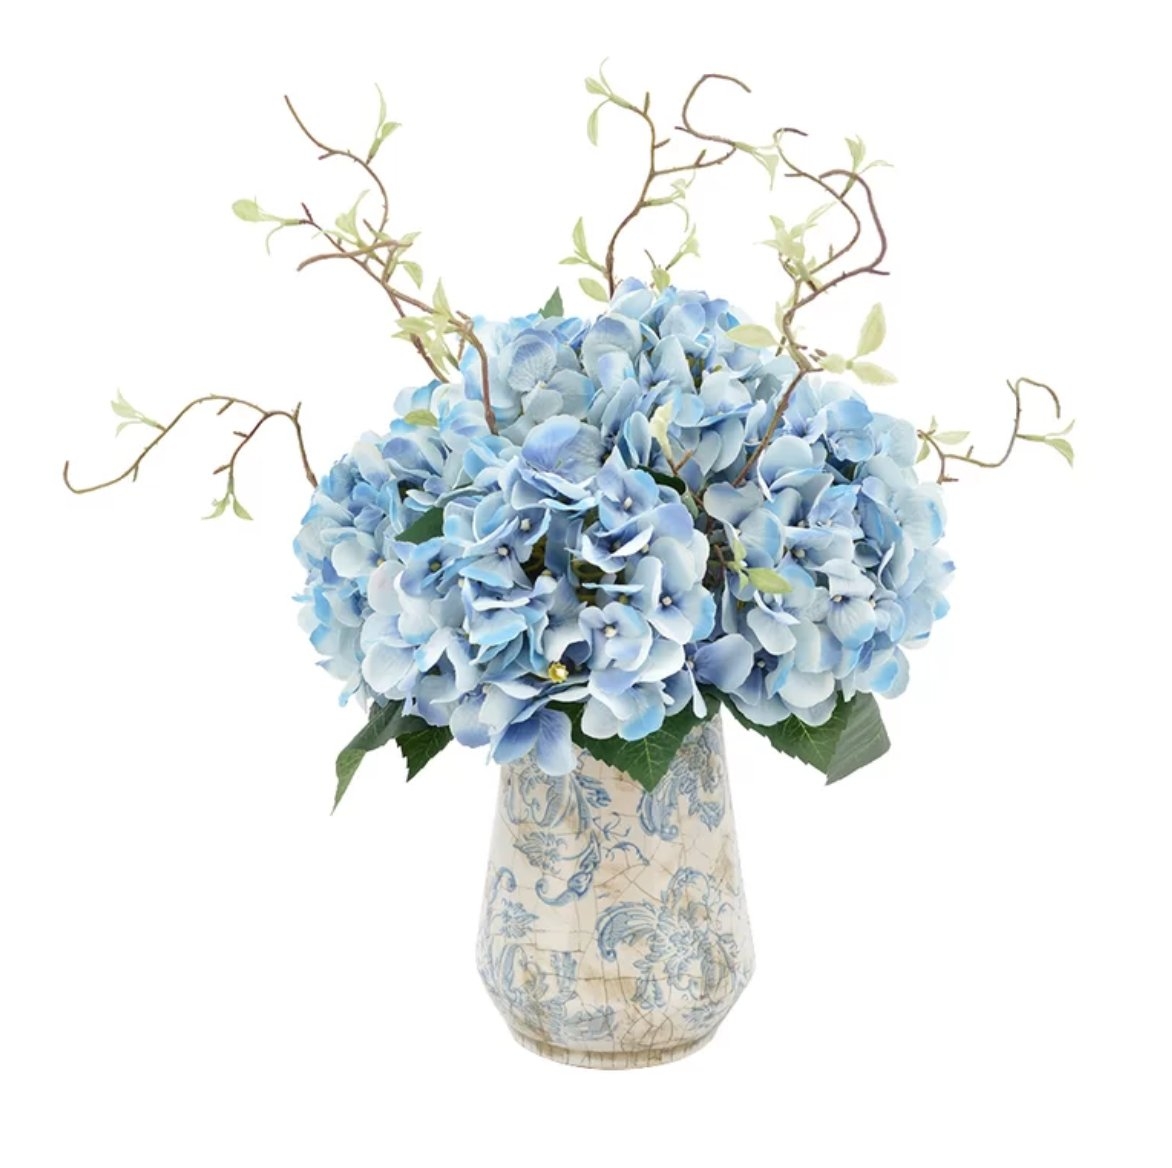 Hydrangea Floral Arrangements with Vines in Rustic Vase - Image 0